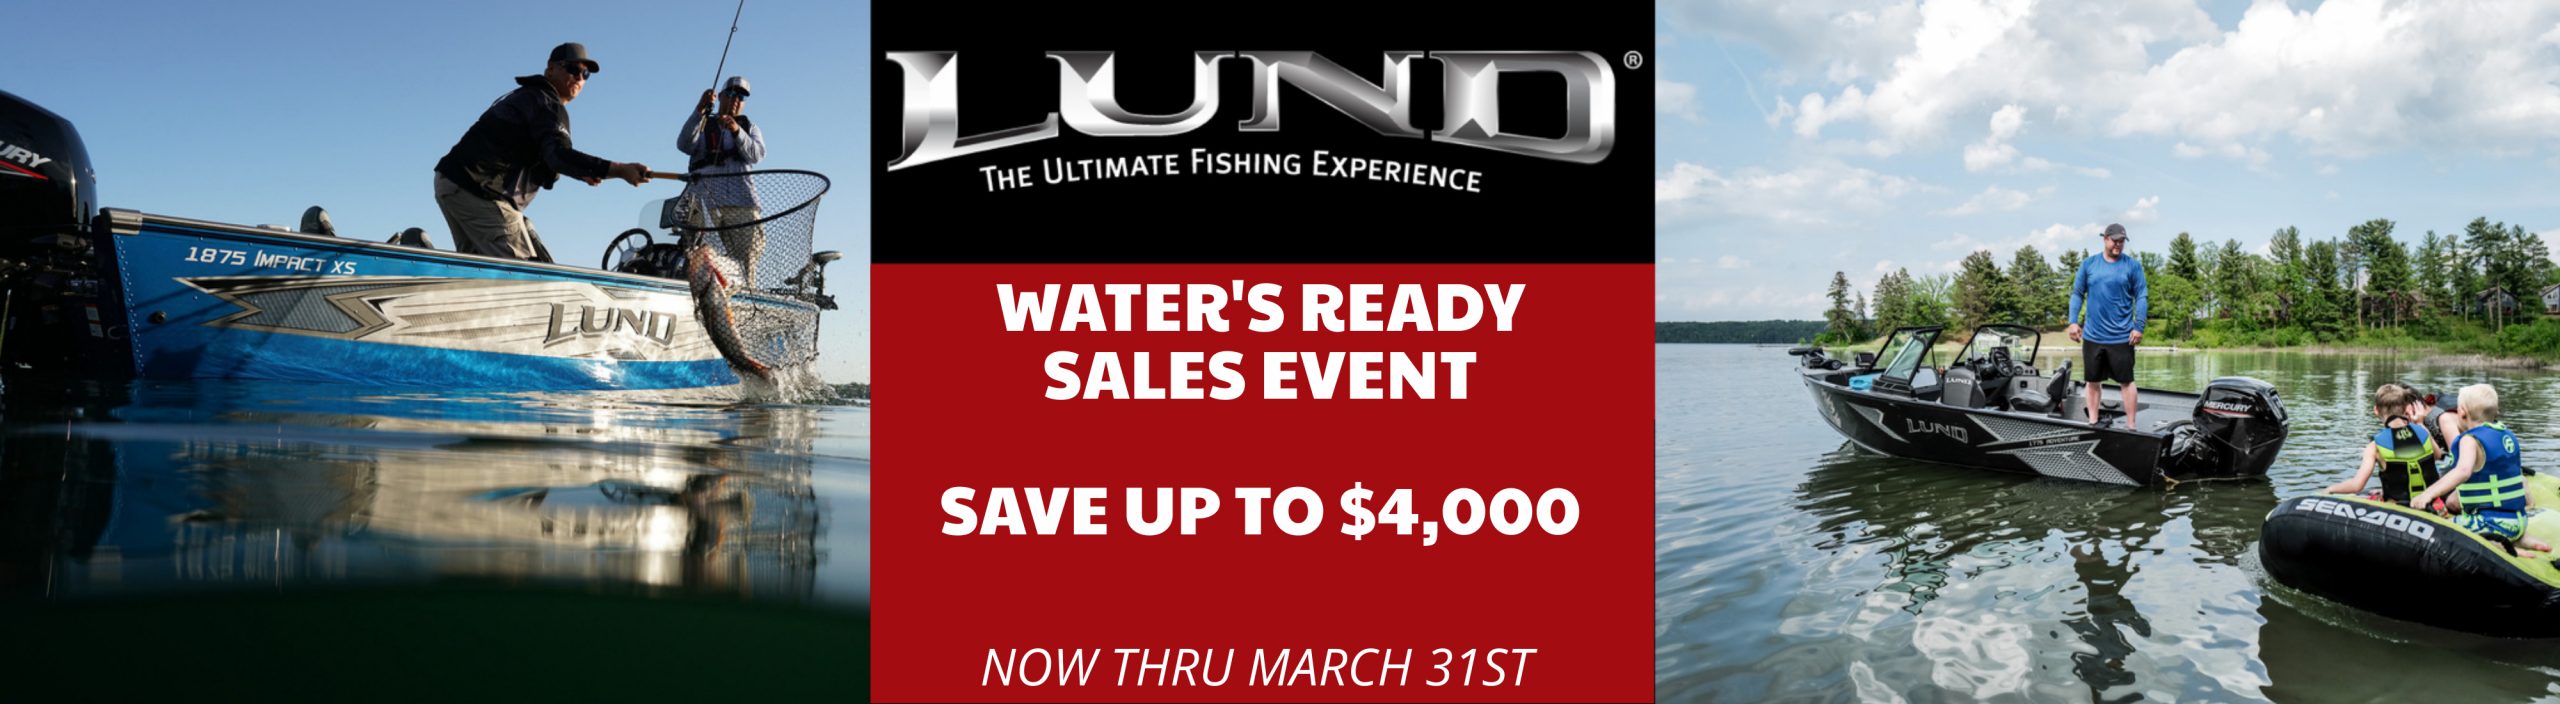 Lund Water Ready Sales Event Banner